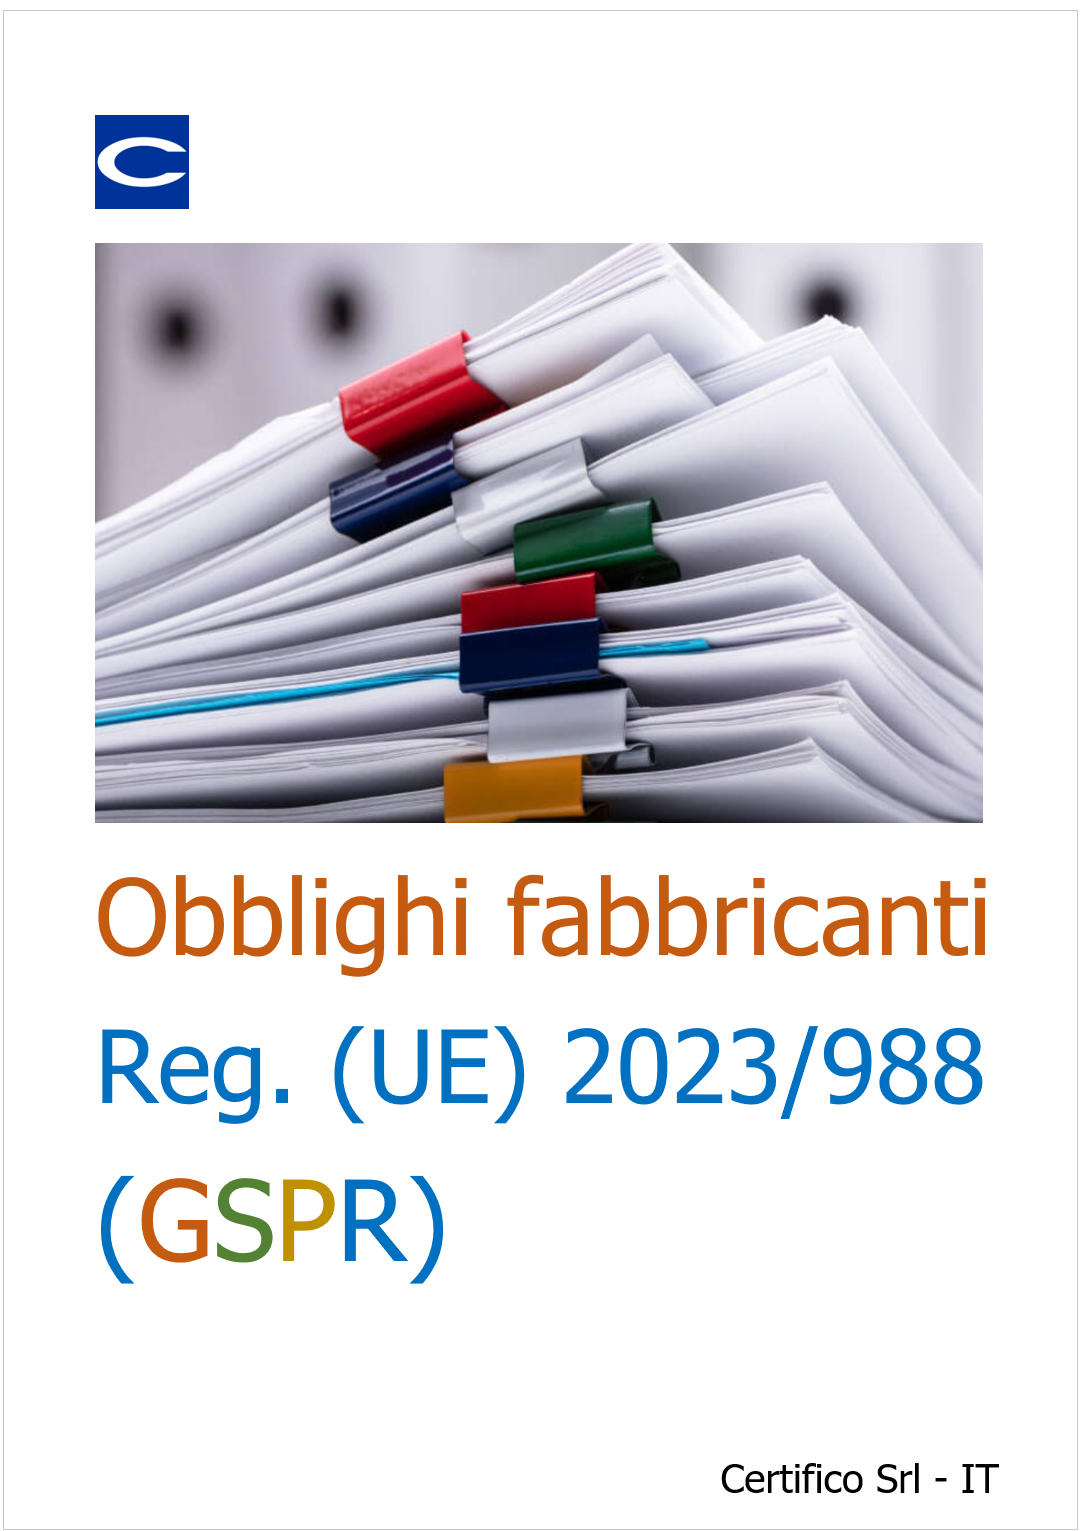 Obblighi fabbricanti  Regolamento  UE  2023 988  GSPR 